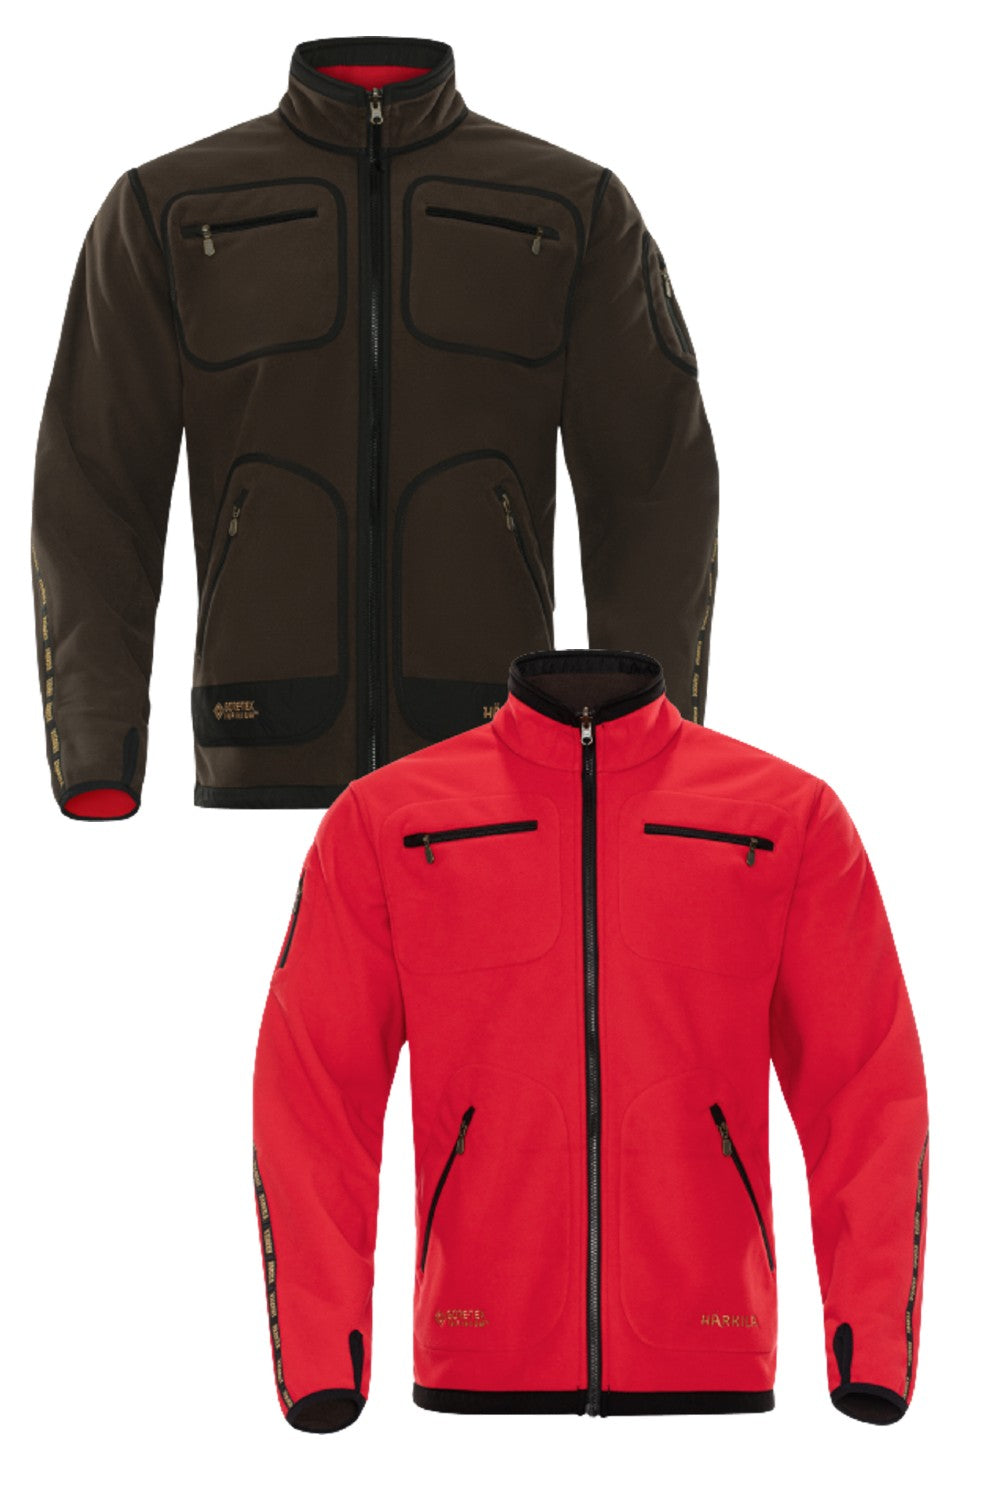 Harkila Kamko Fleece Jacket in Brown/Red 